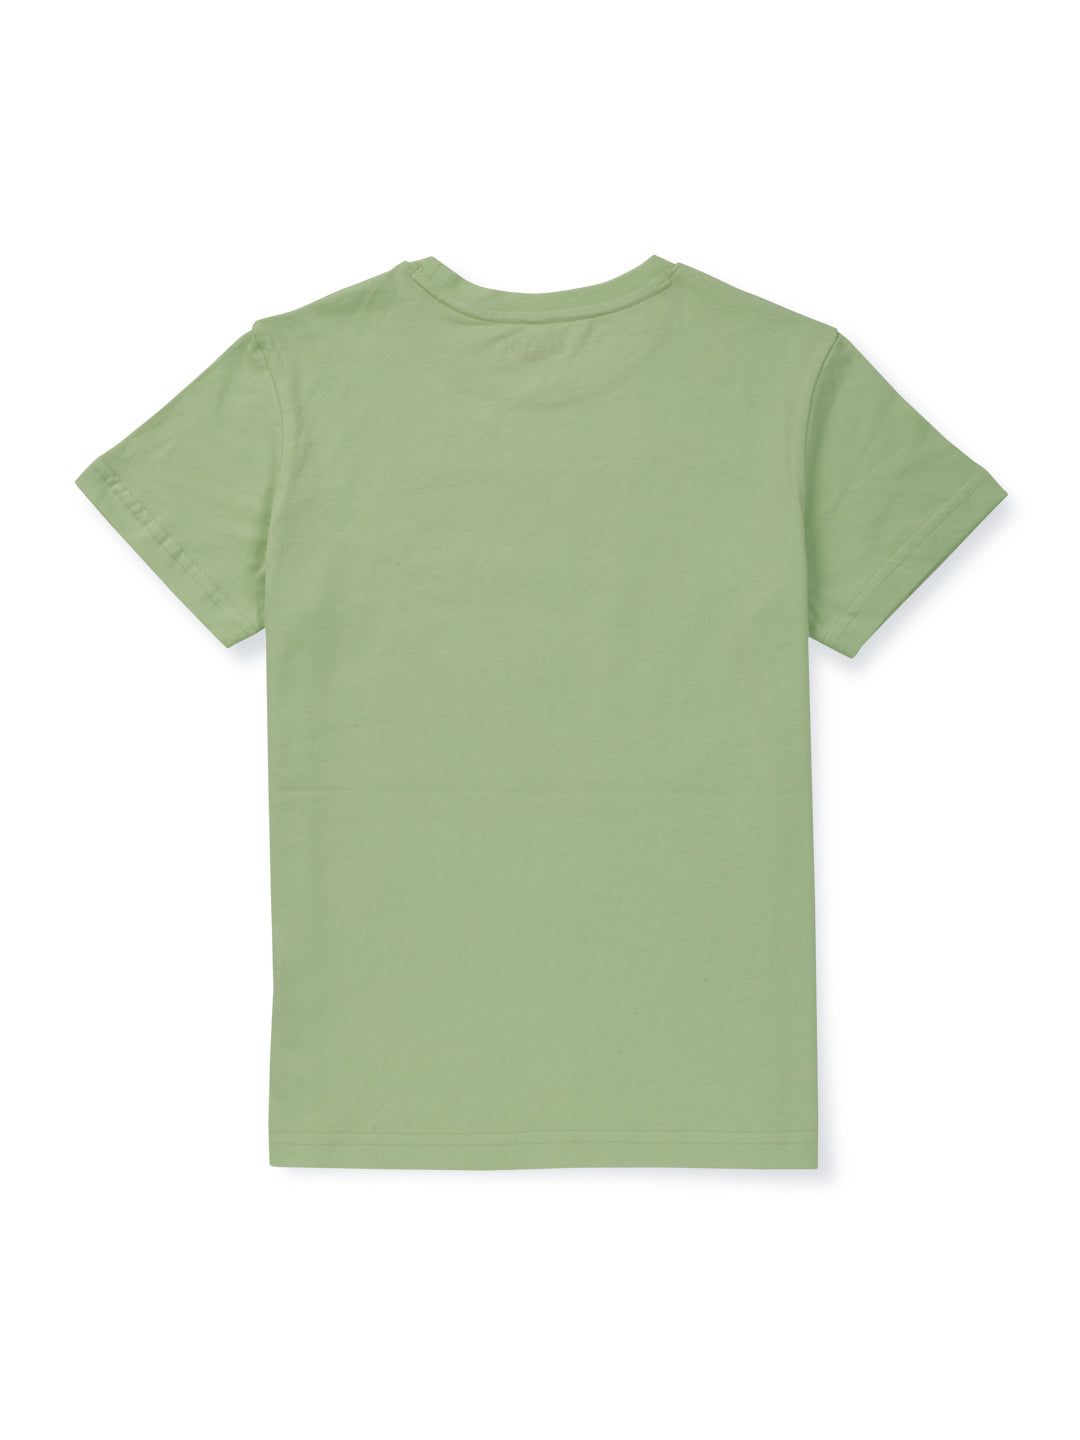 Boys Green Cotton Solid T-Shirt